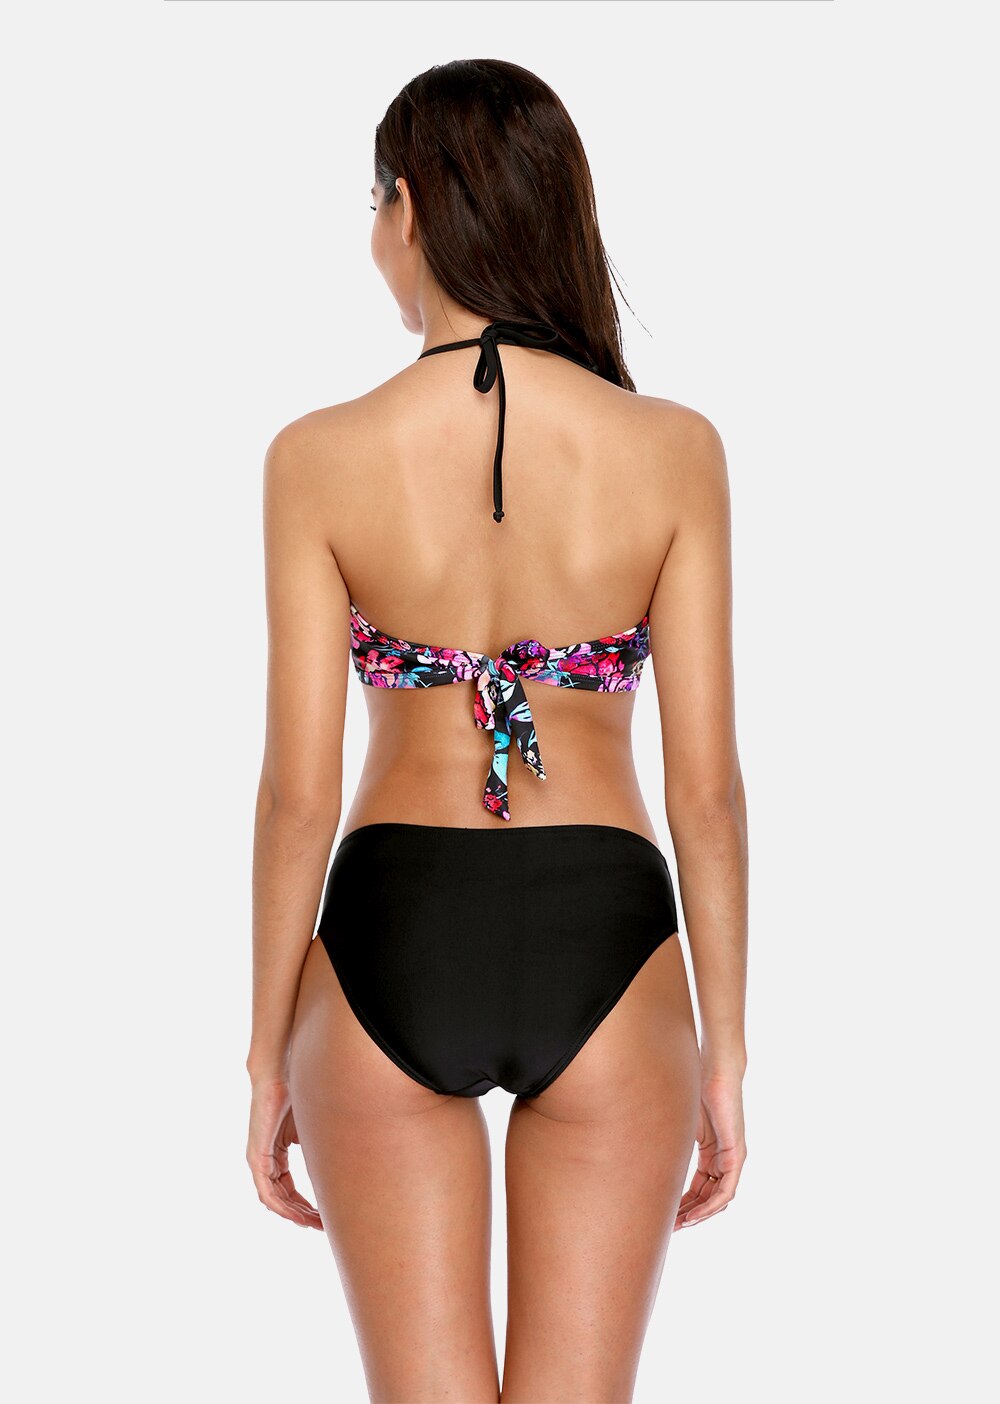 Women Halter-neck Bikini Set High Neck Cross Swimwear Retro Wave Printed Swimsuit Sexy Bikini Bathing Suit Beachwear